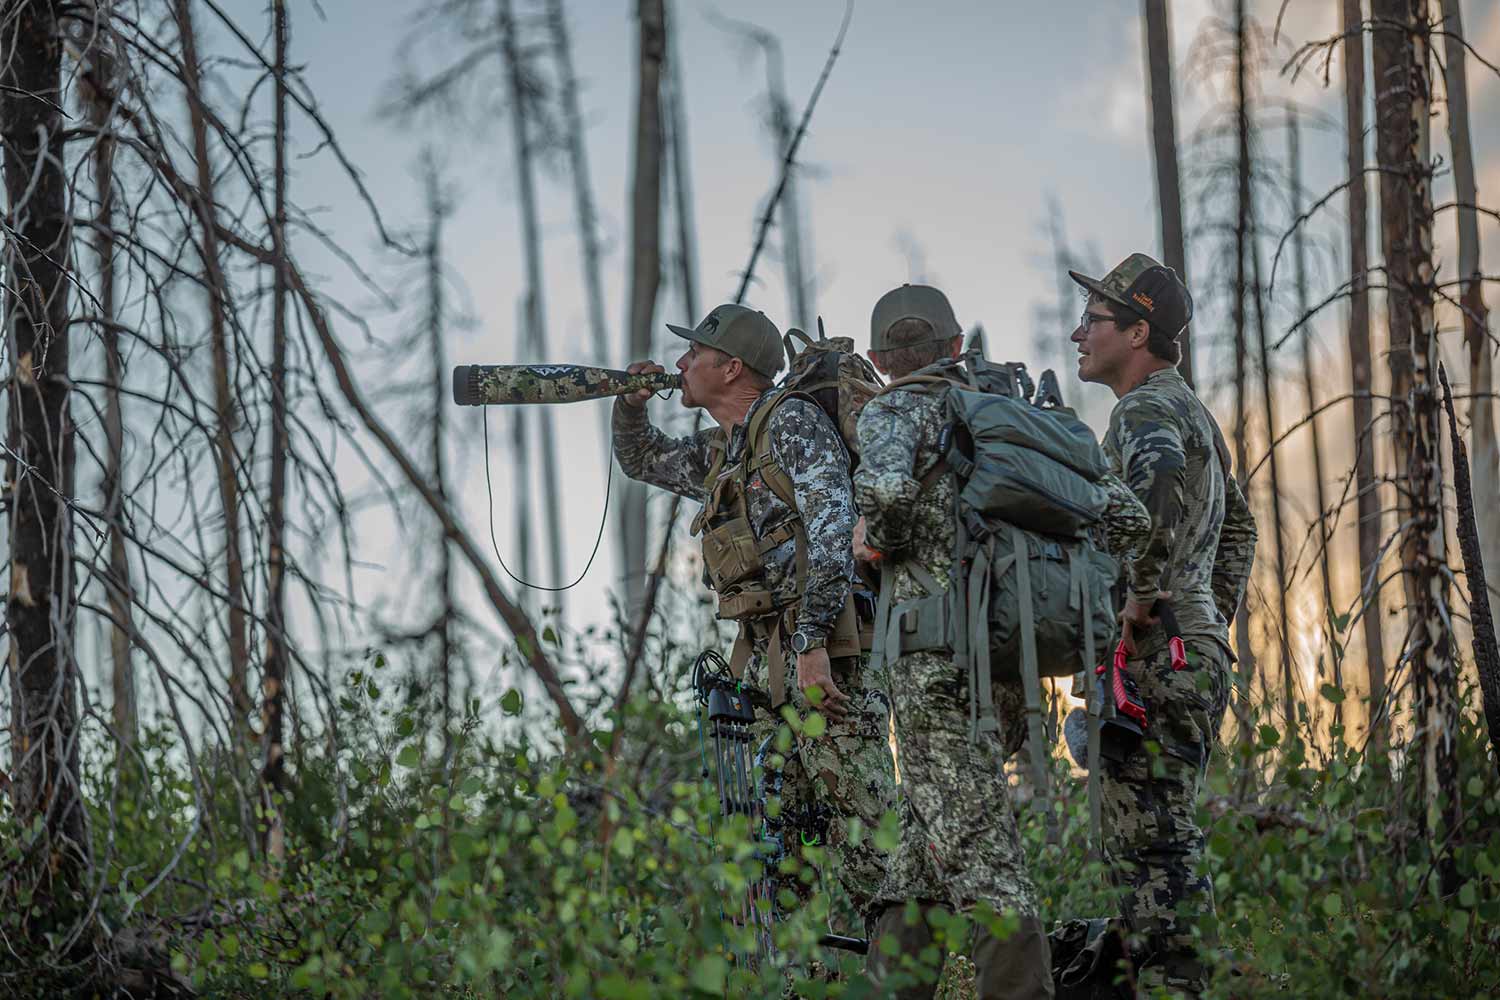 hunters walking through the woods while calling elk